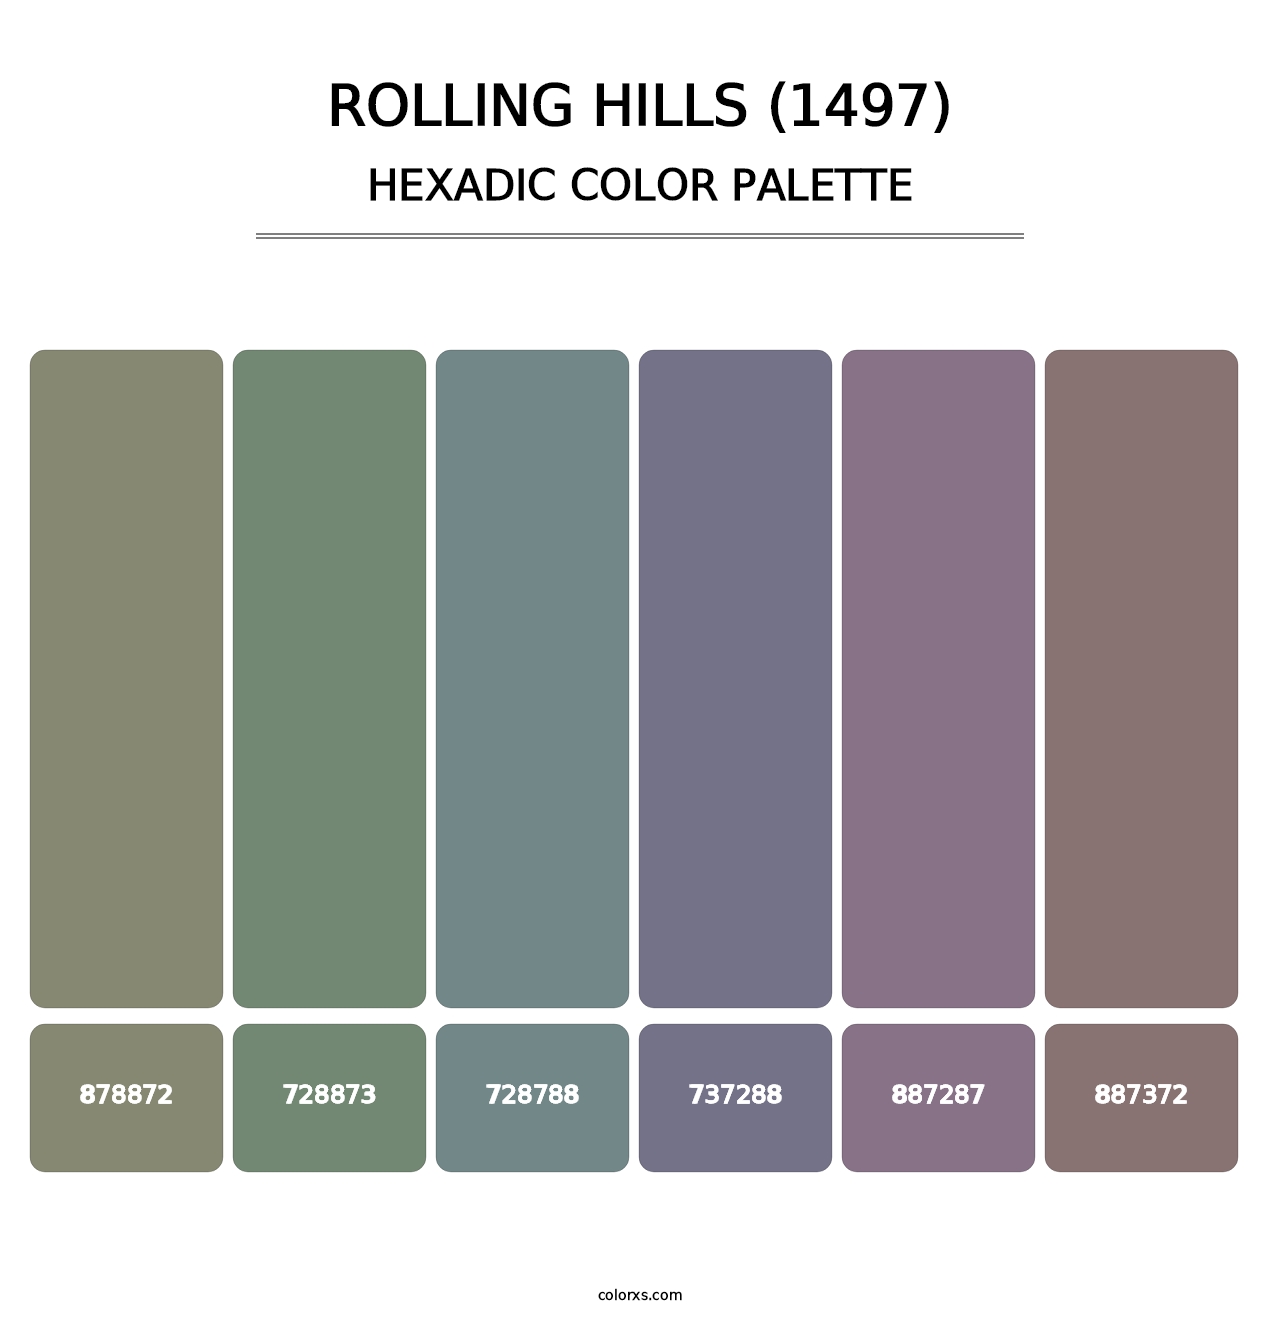 Rolling Hills (1497) - Hexadic Color Palette